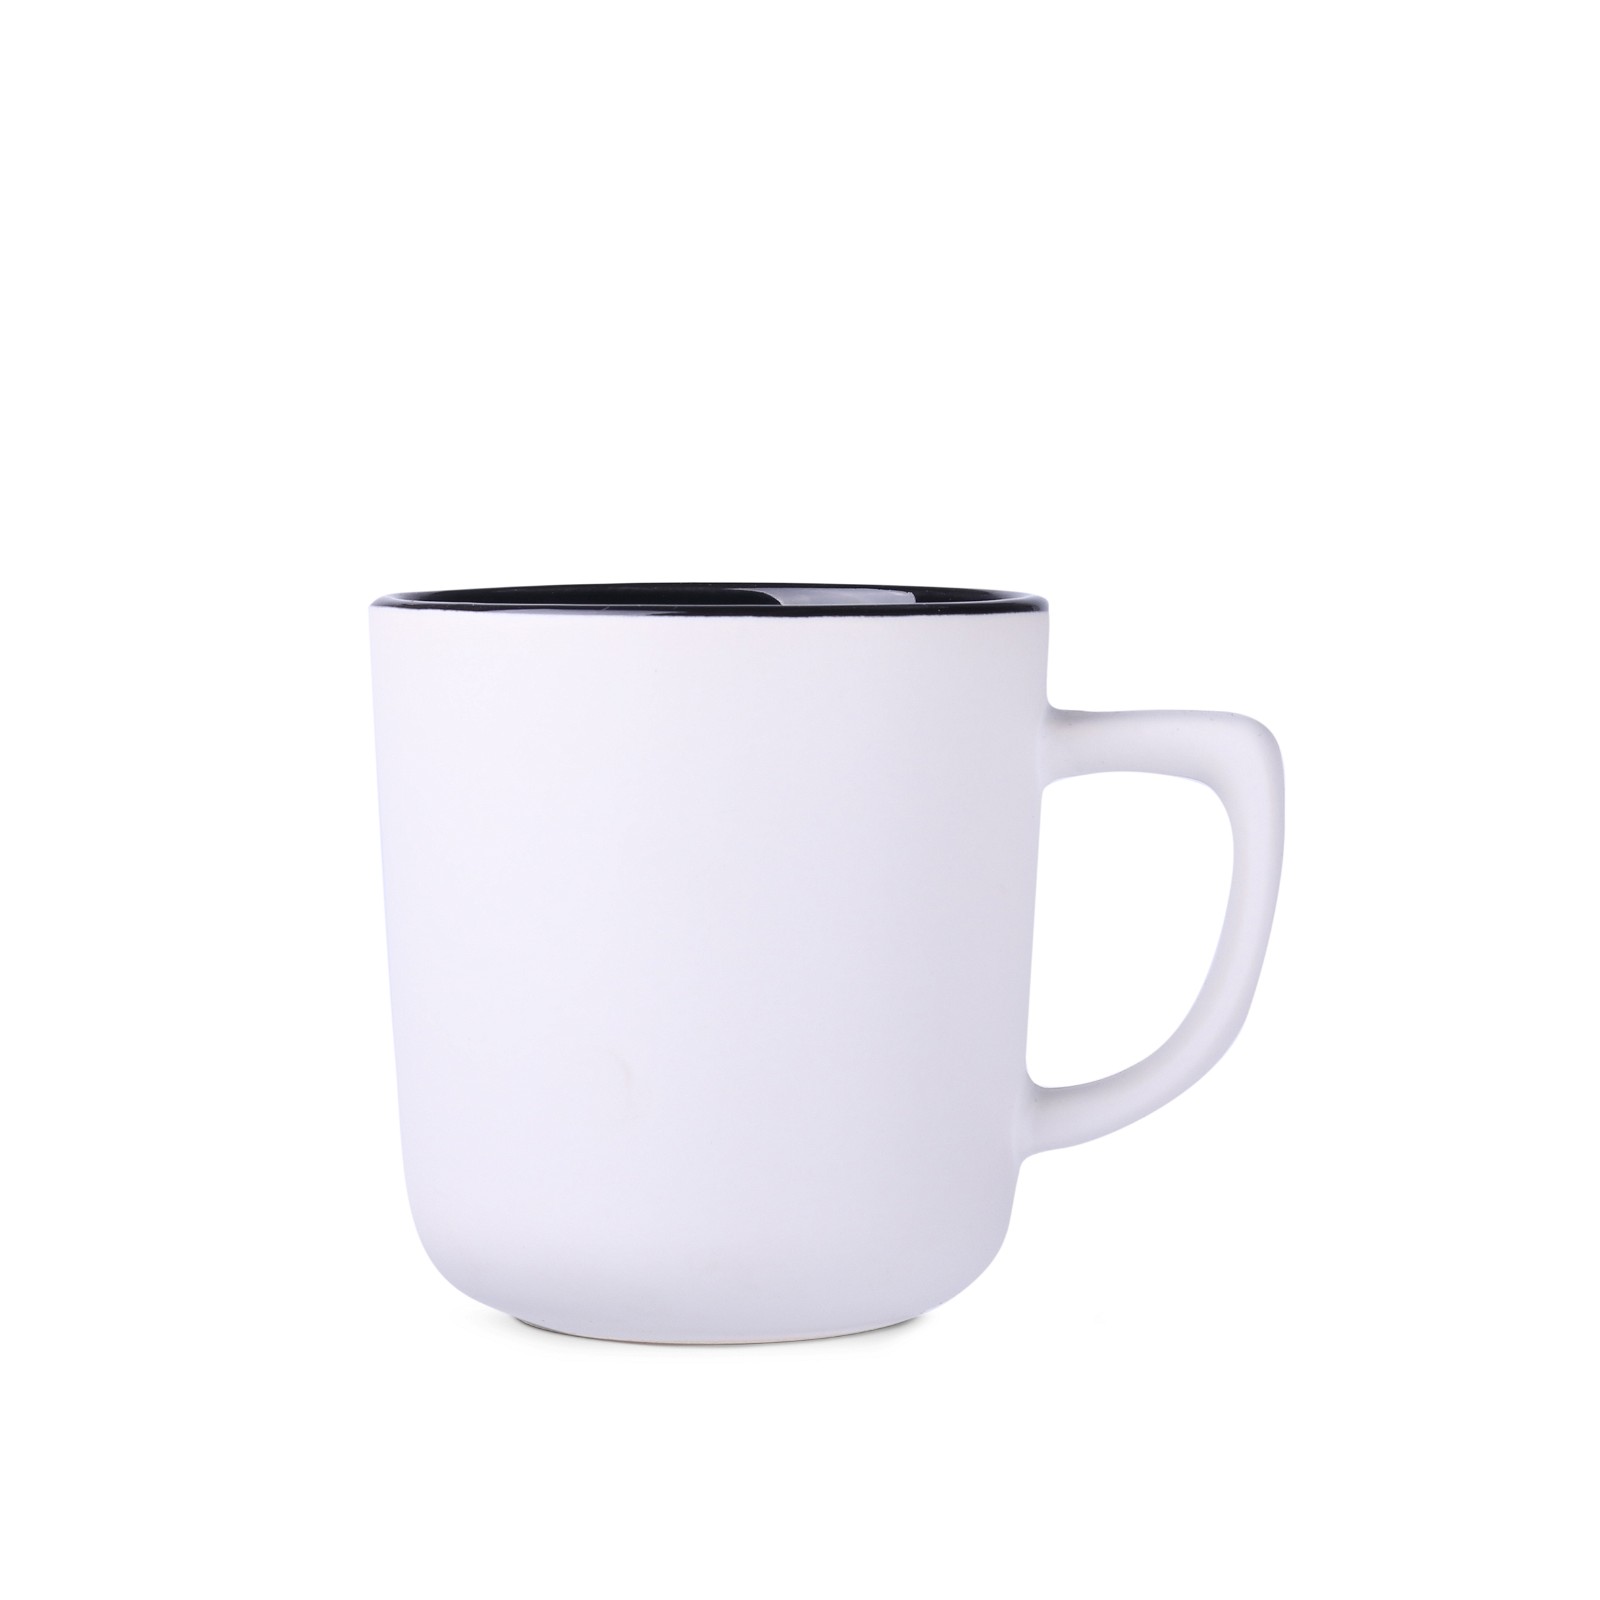 mug rico pure 250ml with logo